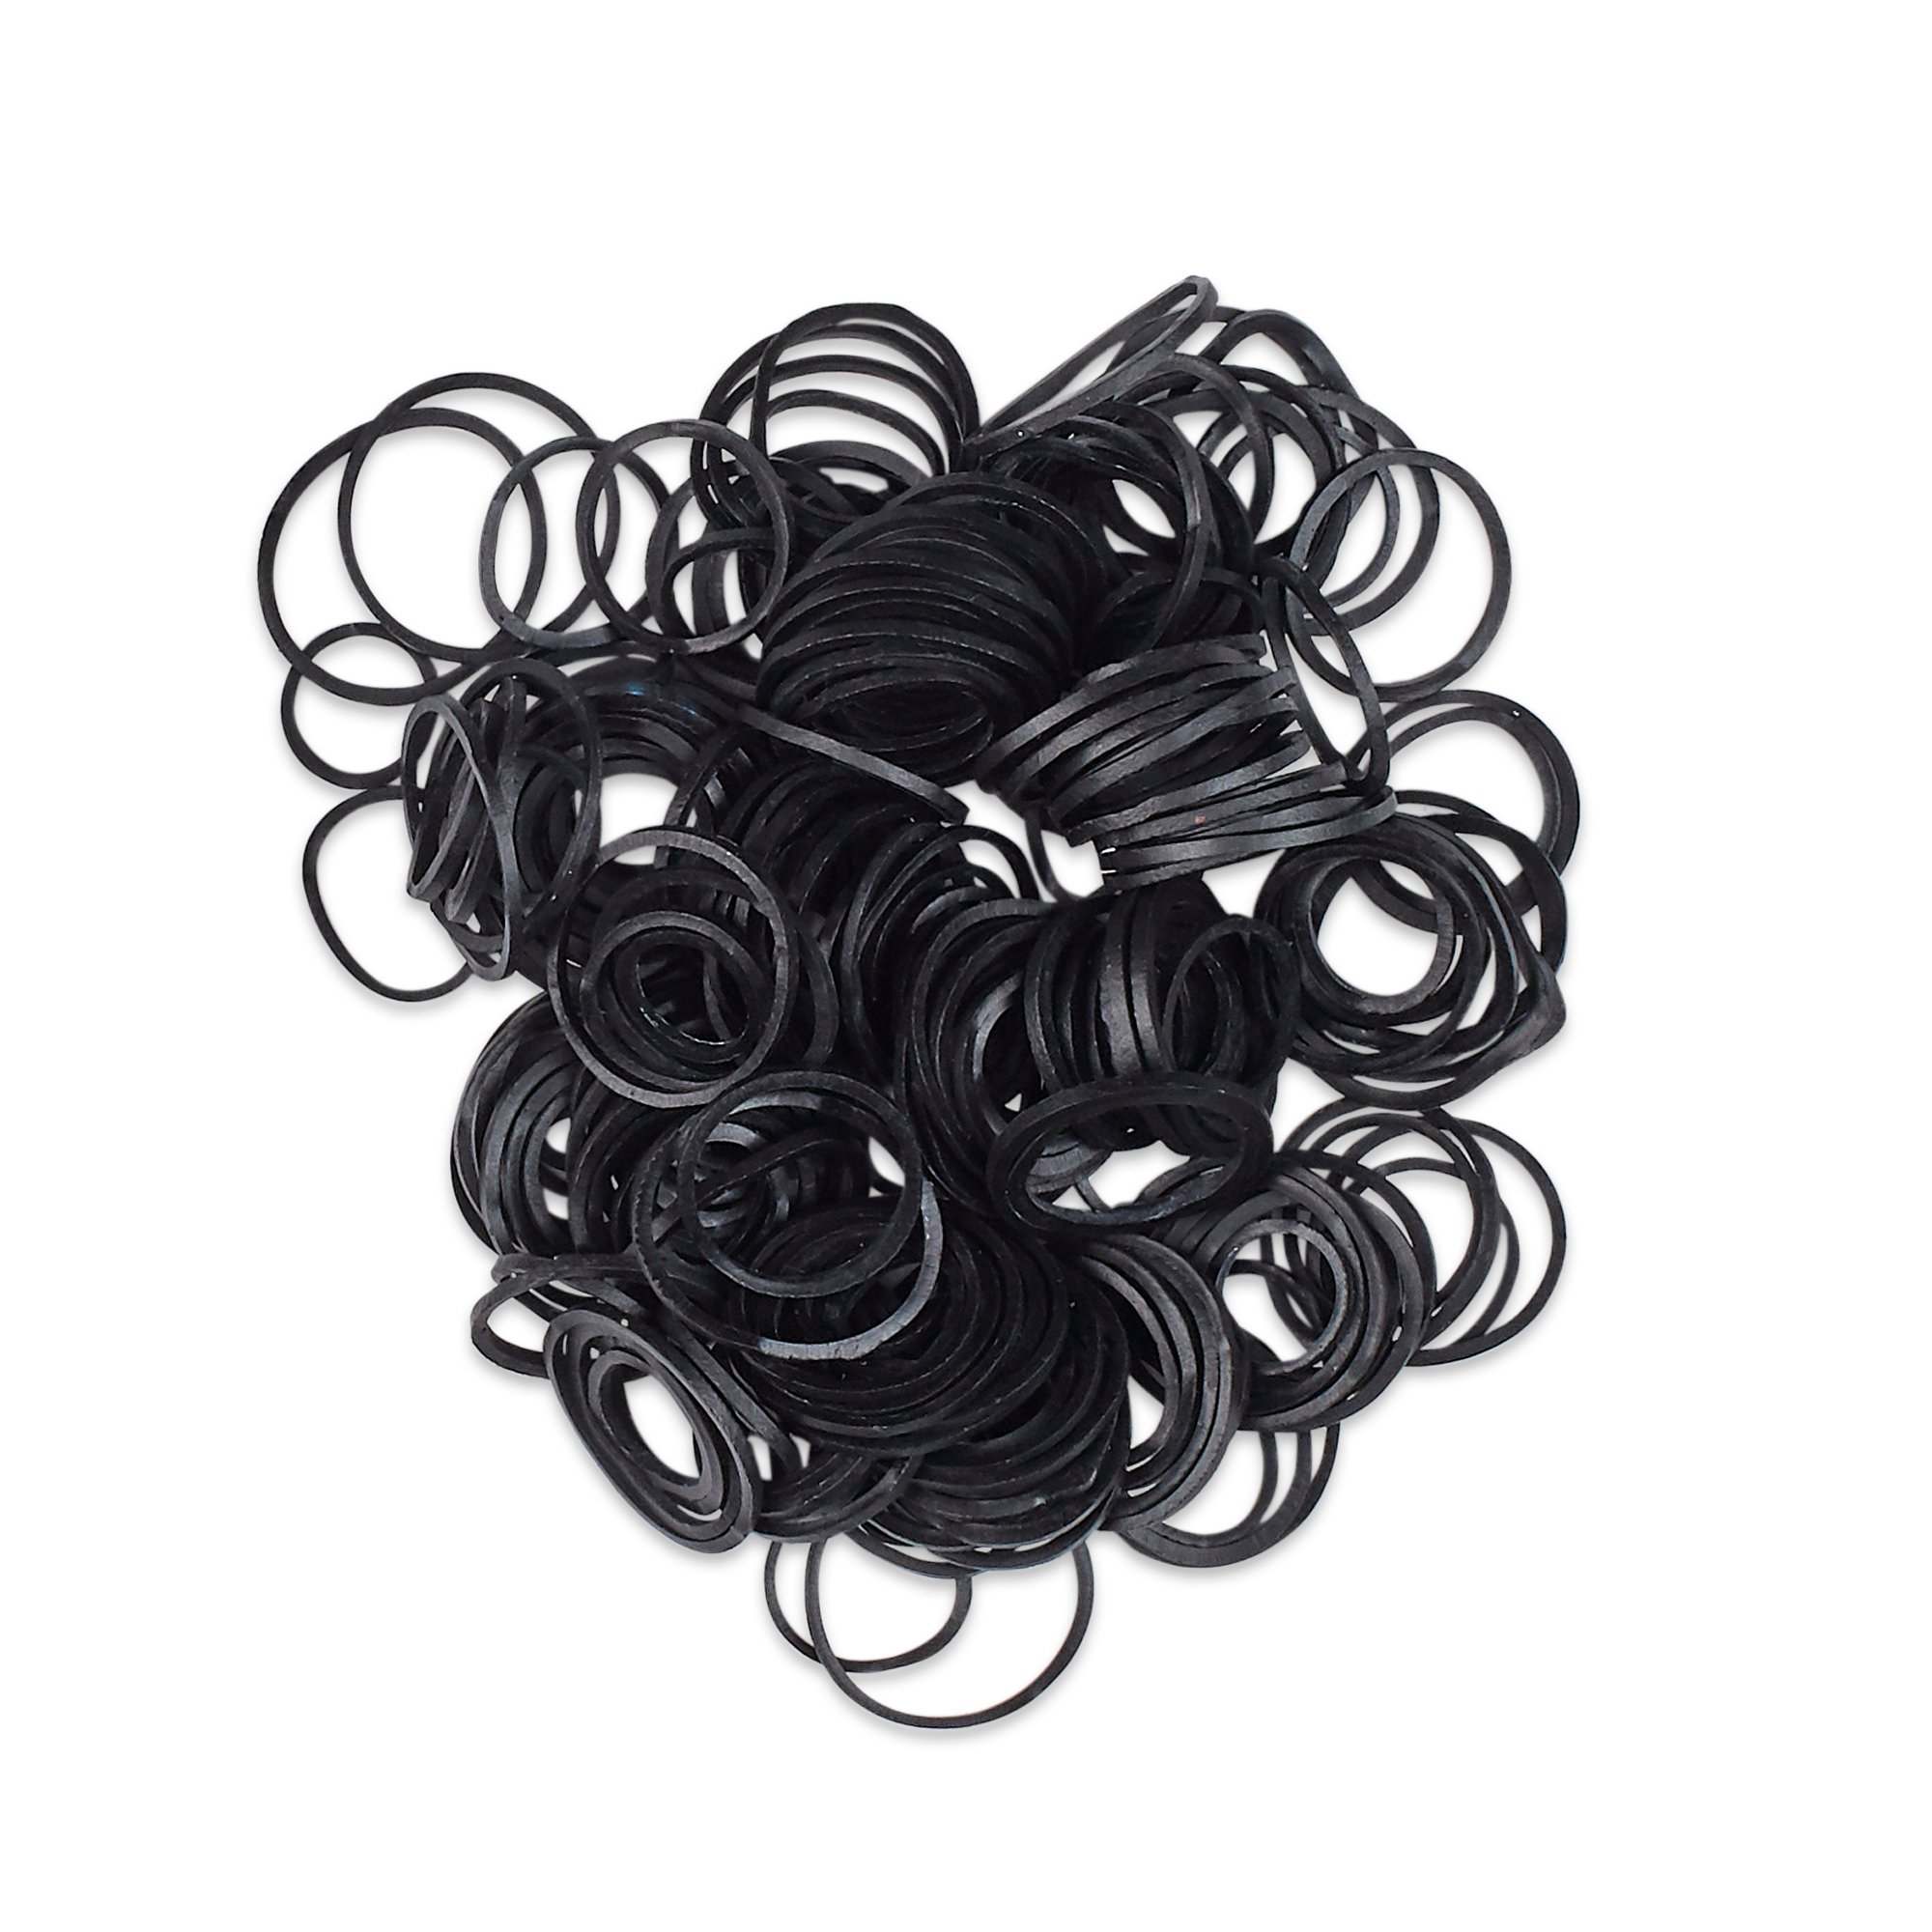 H-E-B Black Small Rubber Bands - Shop Hair Accessories at H-E-B